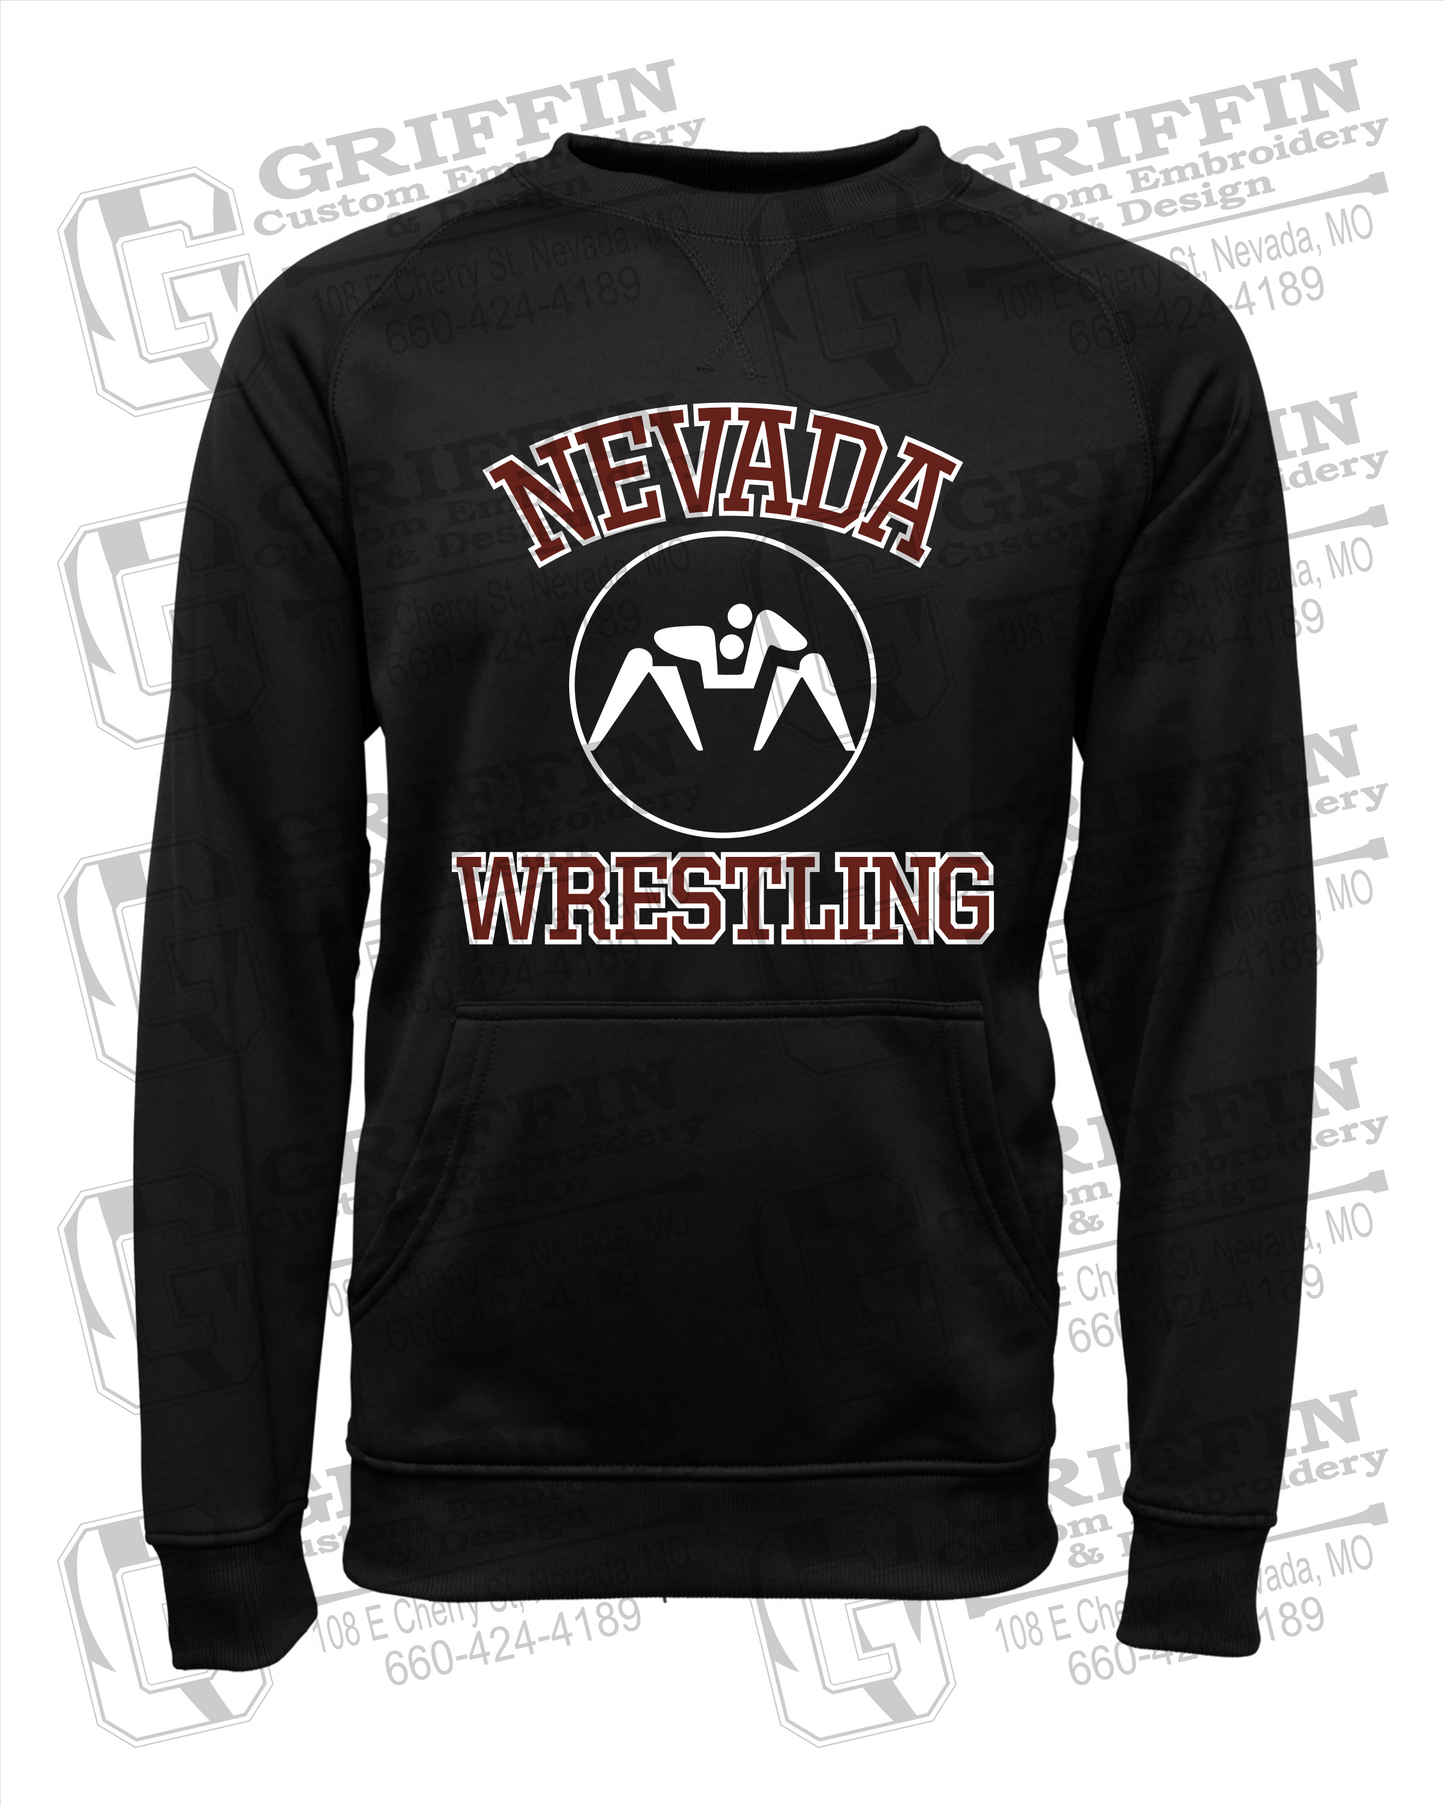 Nevada Tigers 24-J Sweatshirt - Wrestling